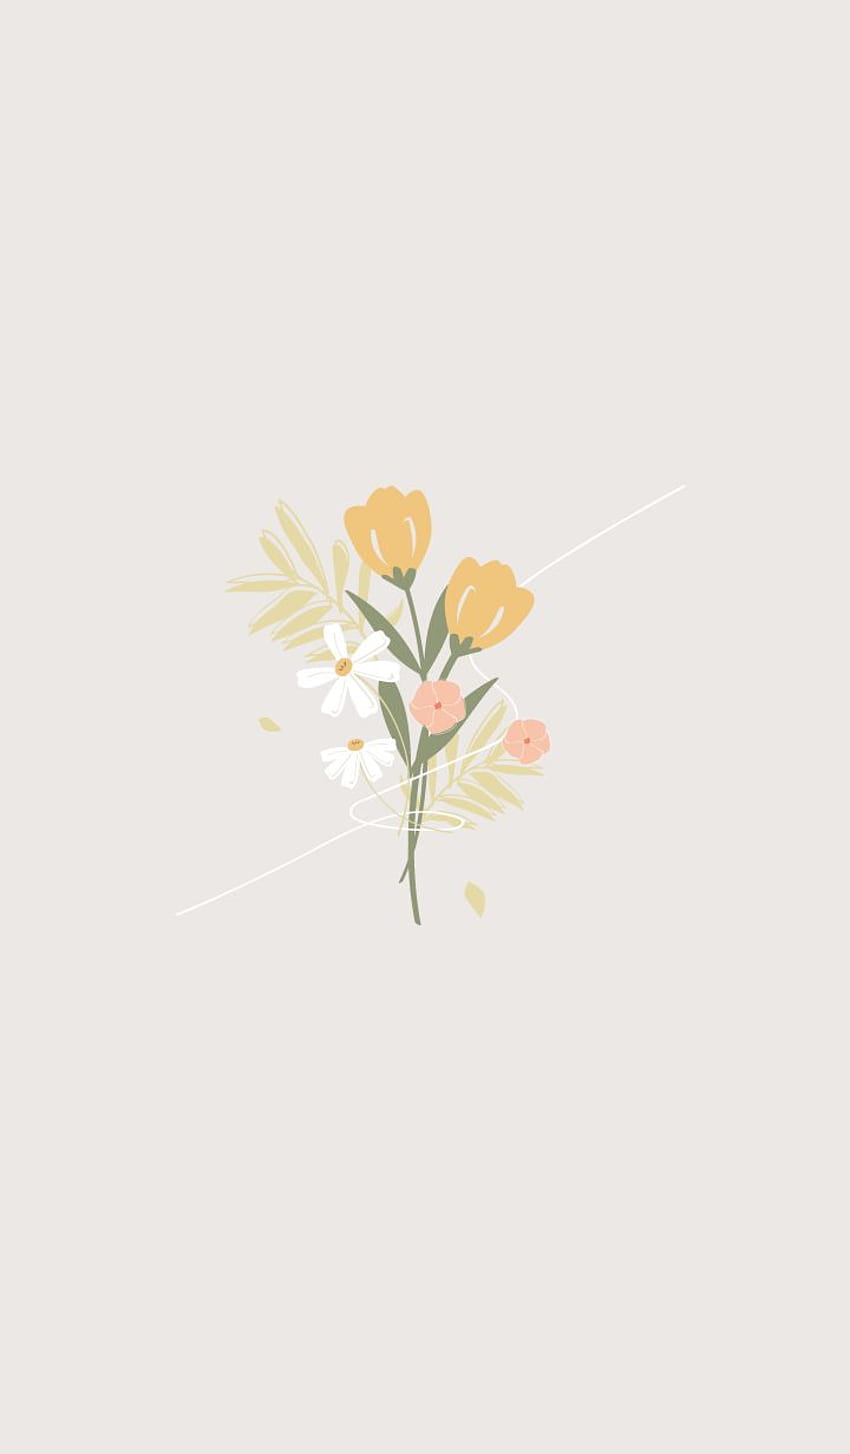 Tumblr데타그付けされたaesthetic Lockscreenの投稿を検索してフォローしよう. 귀여운 단순, 빈티지 꽃, 간단한 아이폰, 단일 꽃 HD 전화 배경 화면